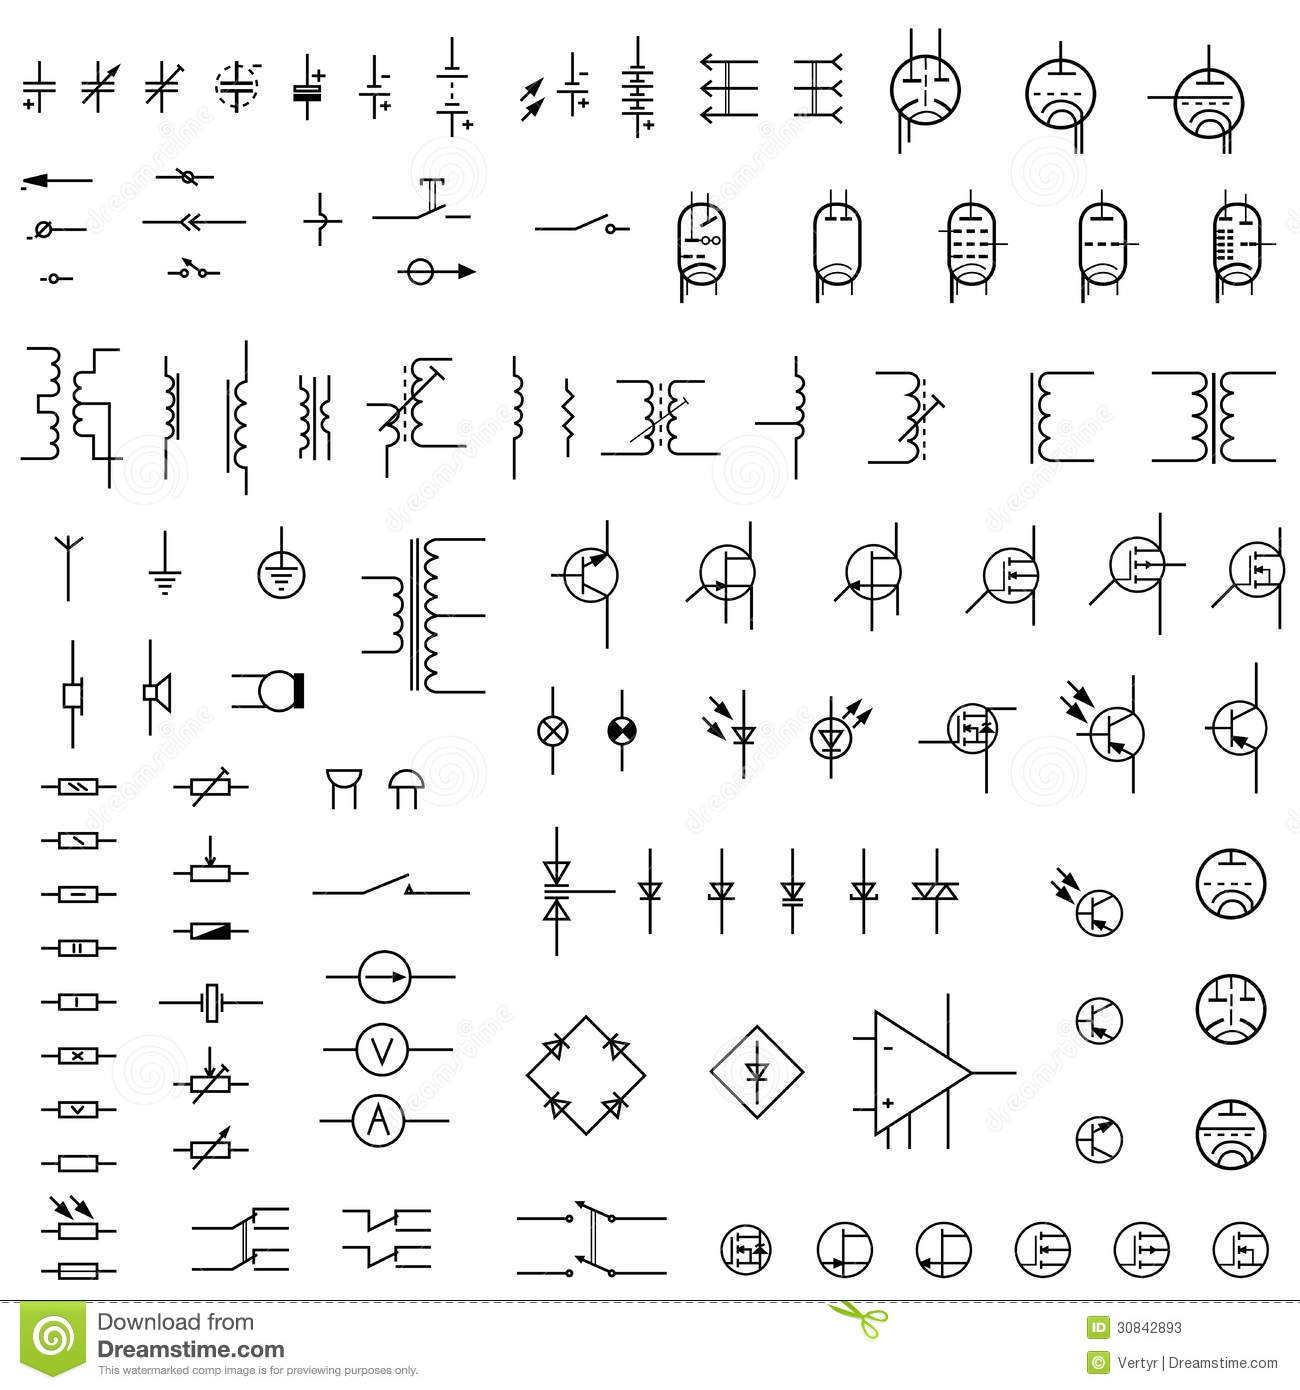 elektroinstallation symbols pdf free